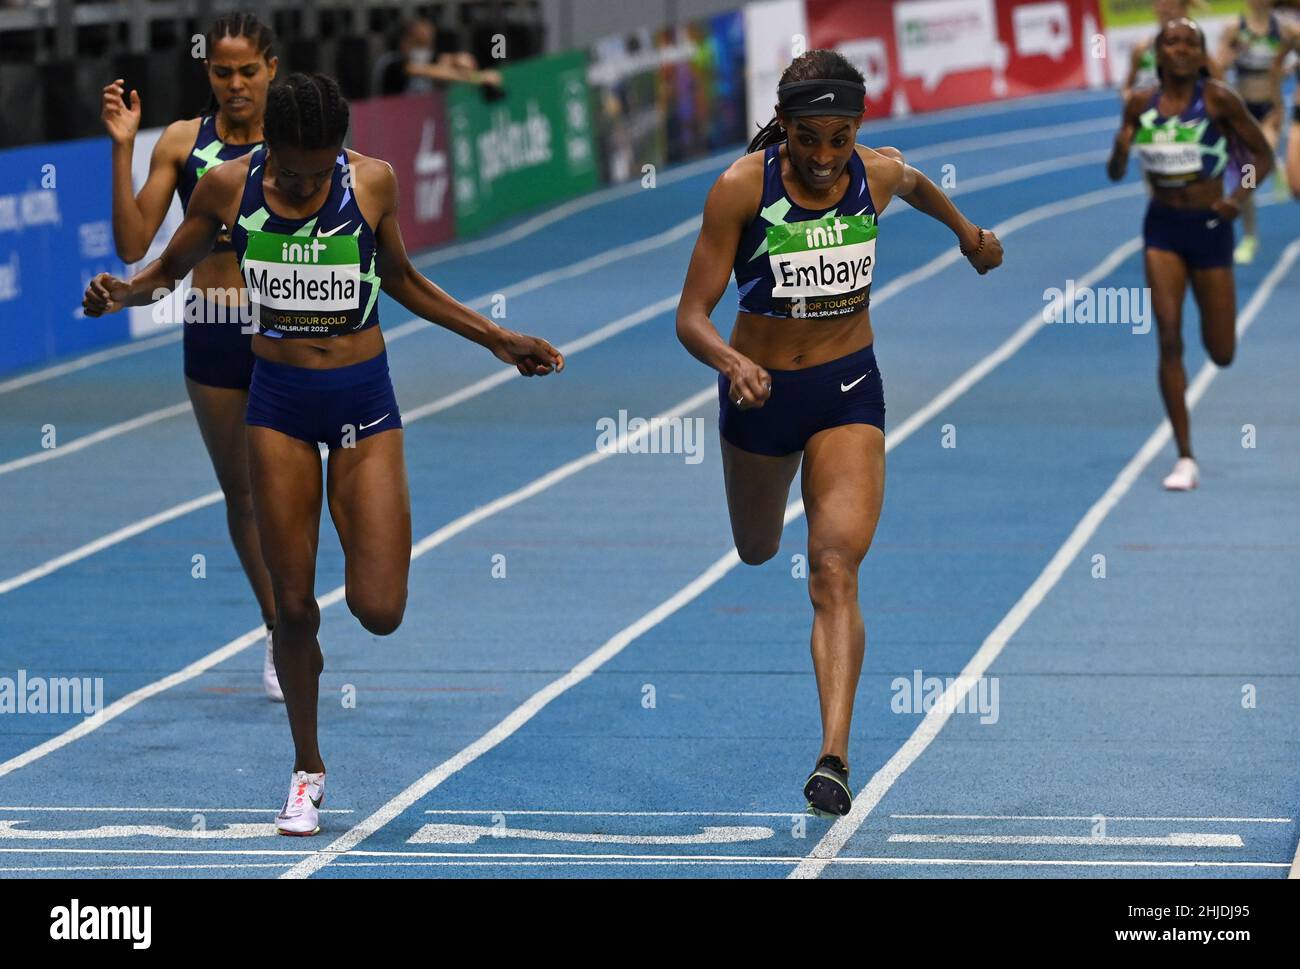 Karlsruhe, Germany. 28th Jan, 2022. Athletics, Indoor Meeting. Axumawit Embaye (M), Hirut Meshesha (2.vl) and Freweyni Hailu (l) from Ethiopia run in the women's 1500m. Credit: Uli Deck/dpa/Alamy Live News Stock Photo